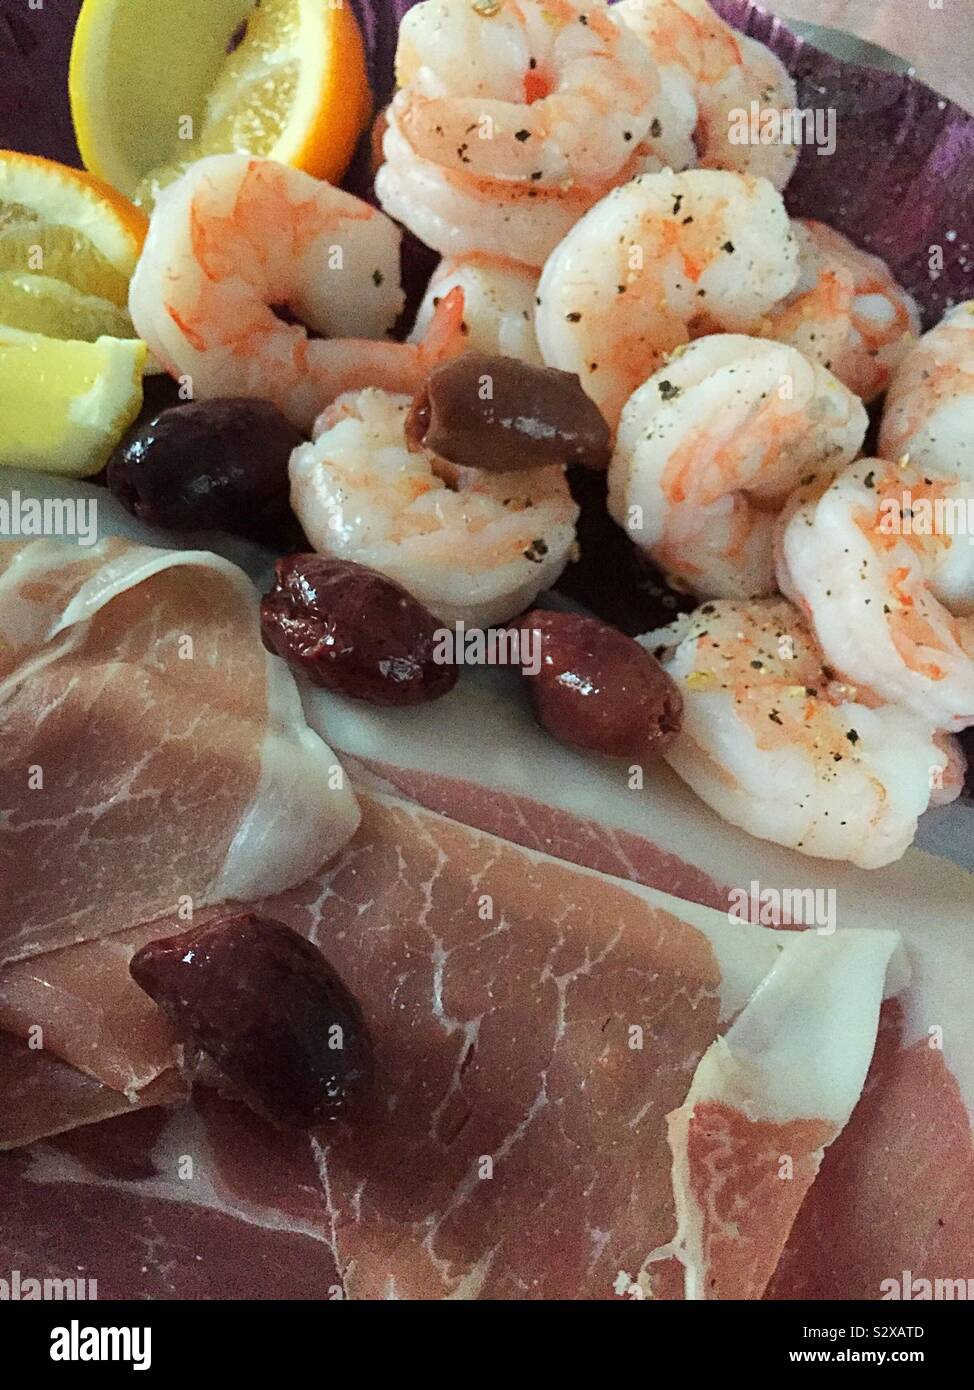 Fancy hors d’oeuvre platter of shrimp, Kalamata olives, prosciutto with lemon wedge garnish Stock Photo